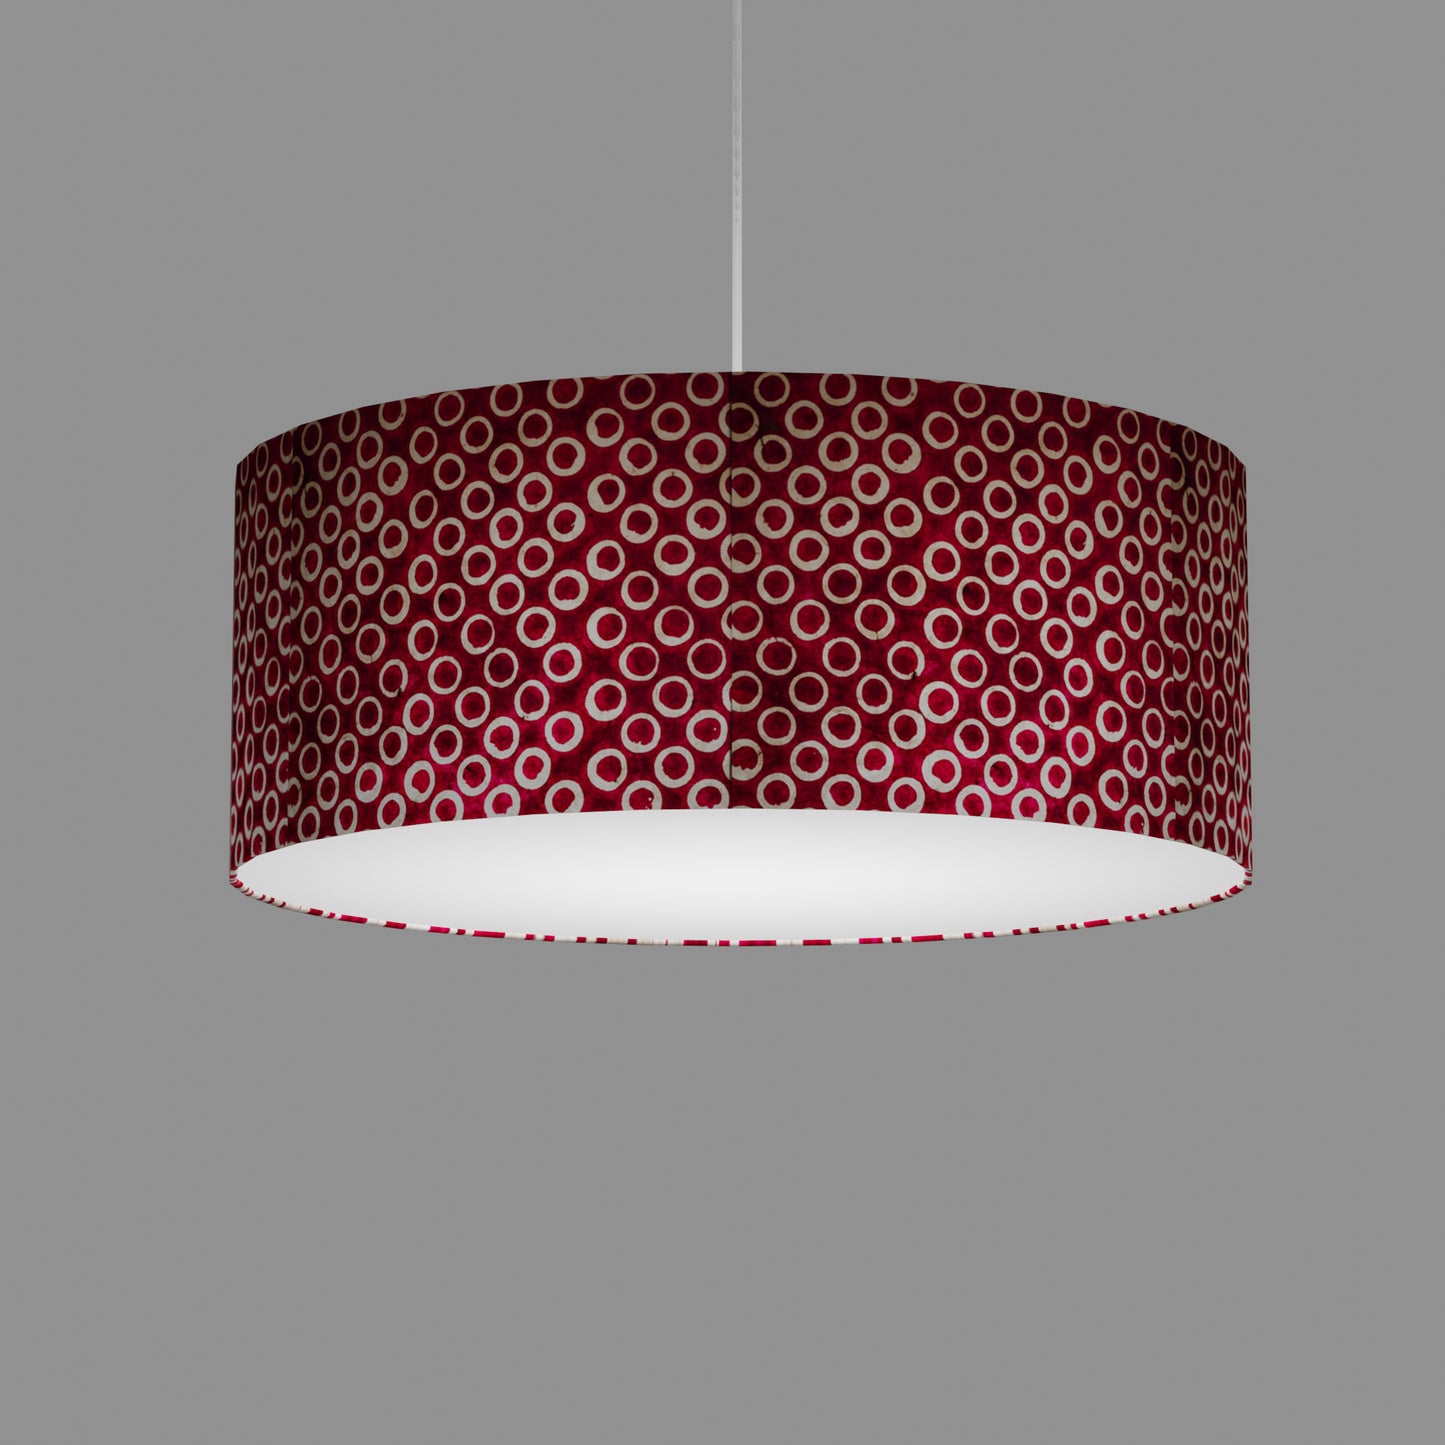 Drum Lamp Shade - P73 - Batik Cranberry Circles, 50cm(d) x 20cm(h)